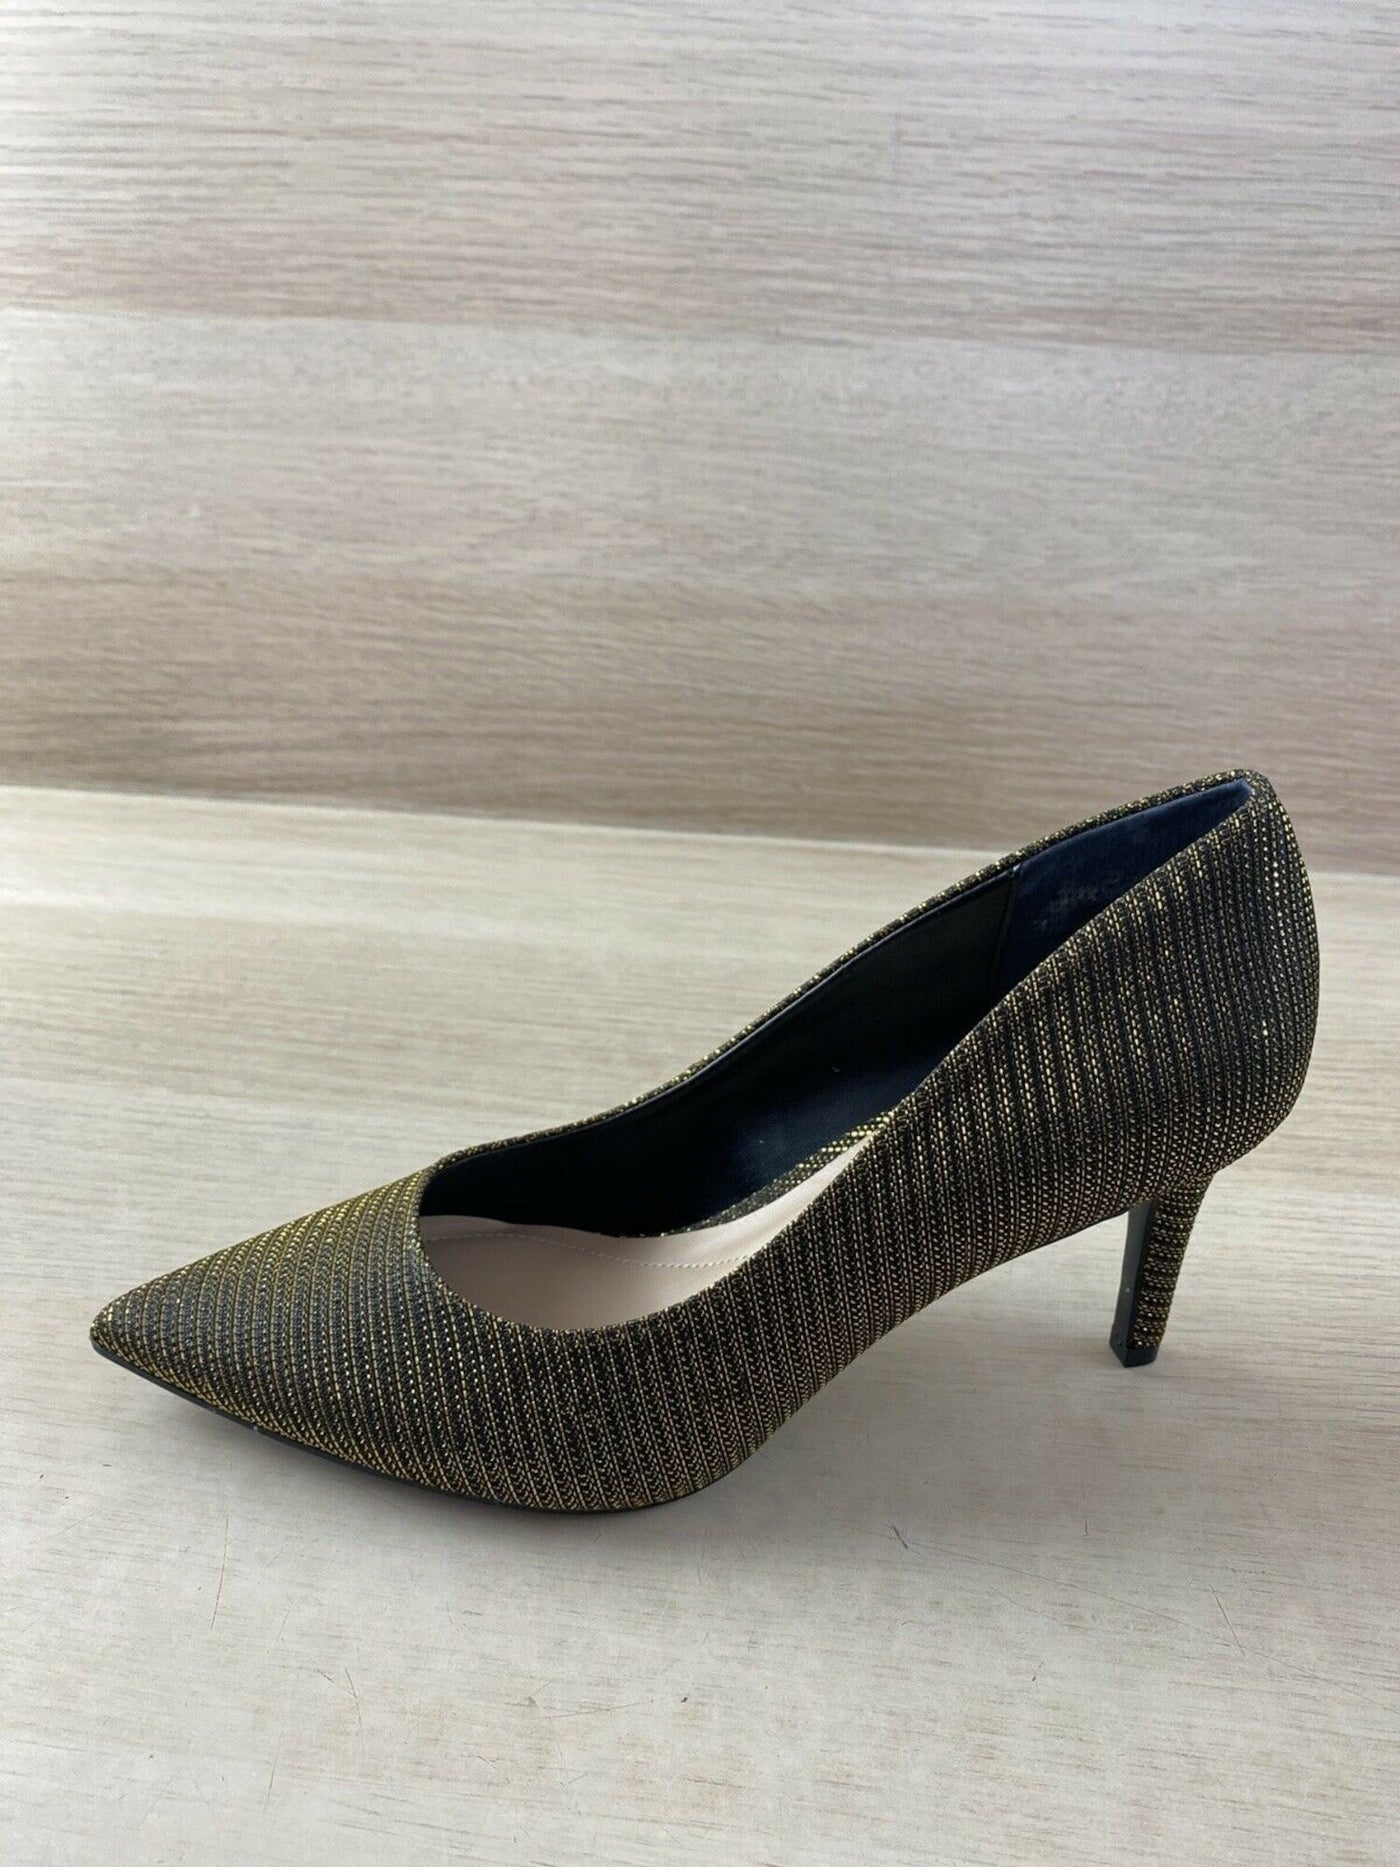 ALFANI Womens Silver Cushioned Metallic Pointed Toe Stiletto Slip On Dress Pumps Shoes 6.5